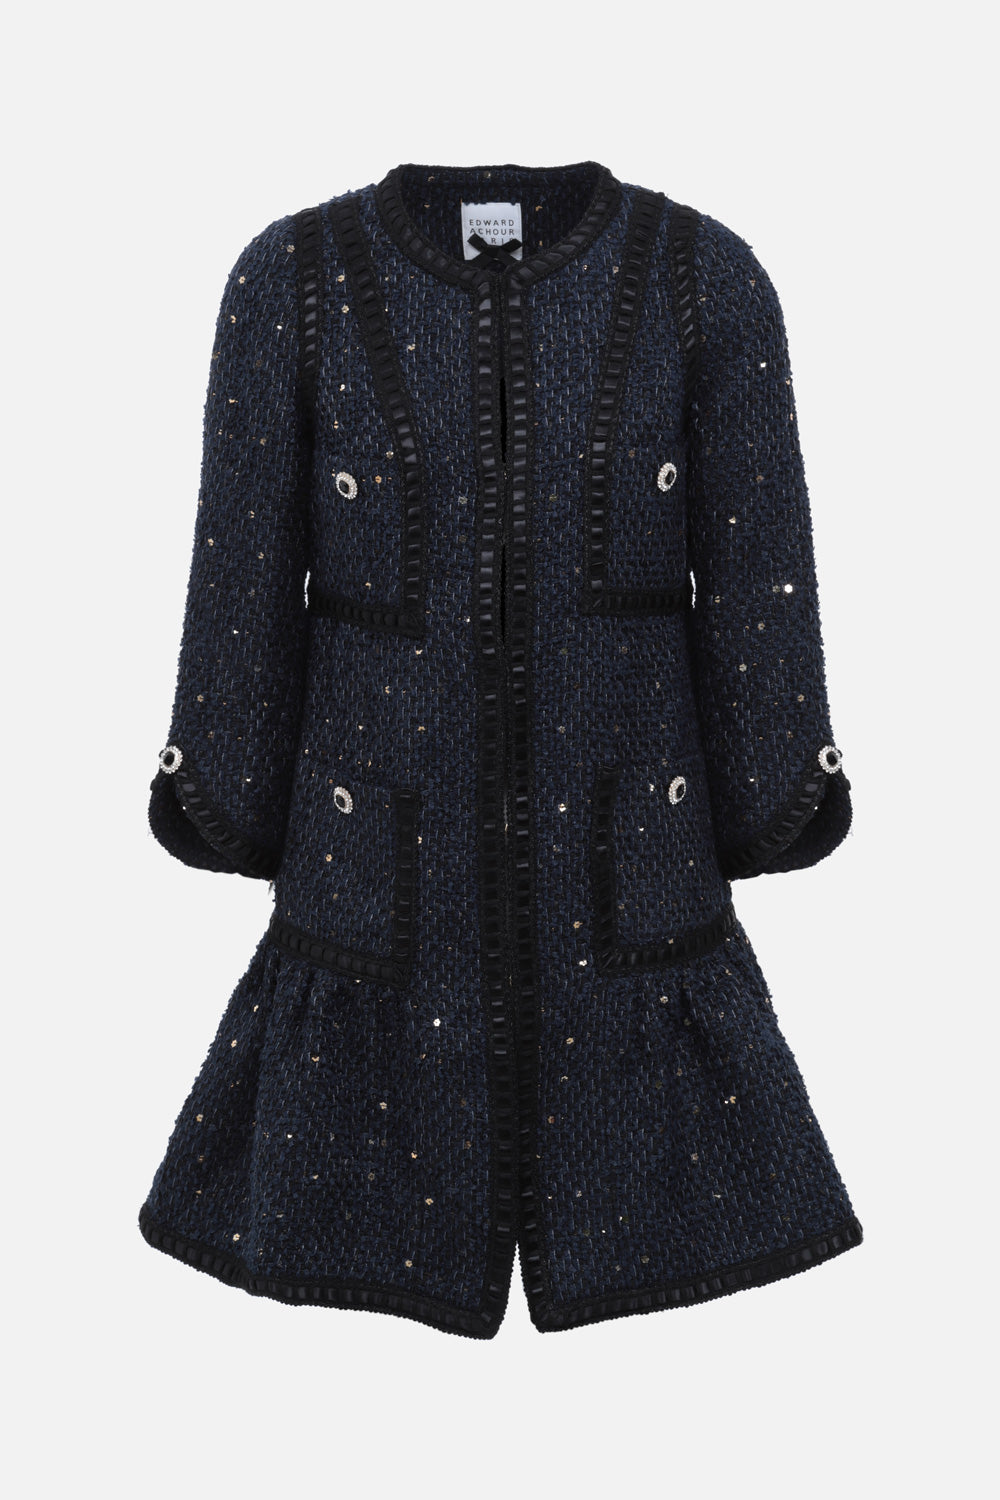 Midnight blue speckled tweed jacket